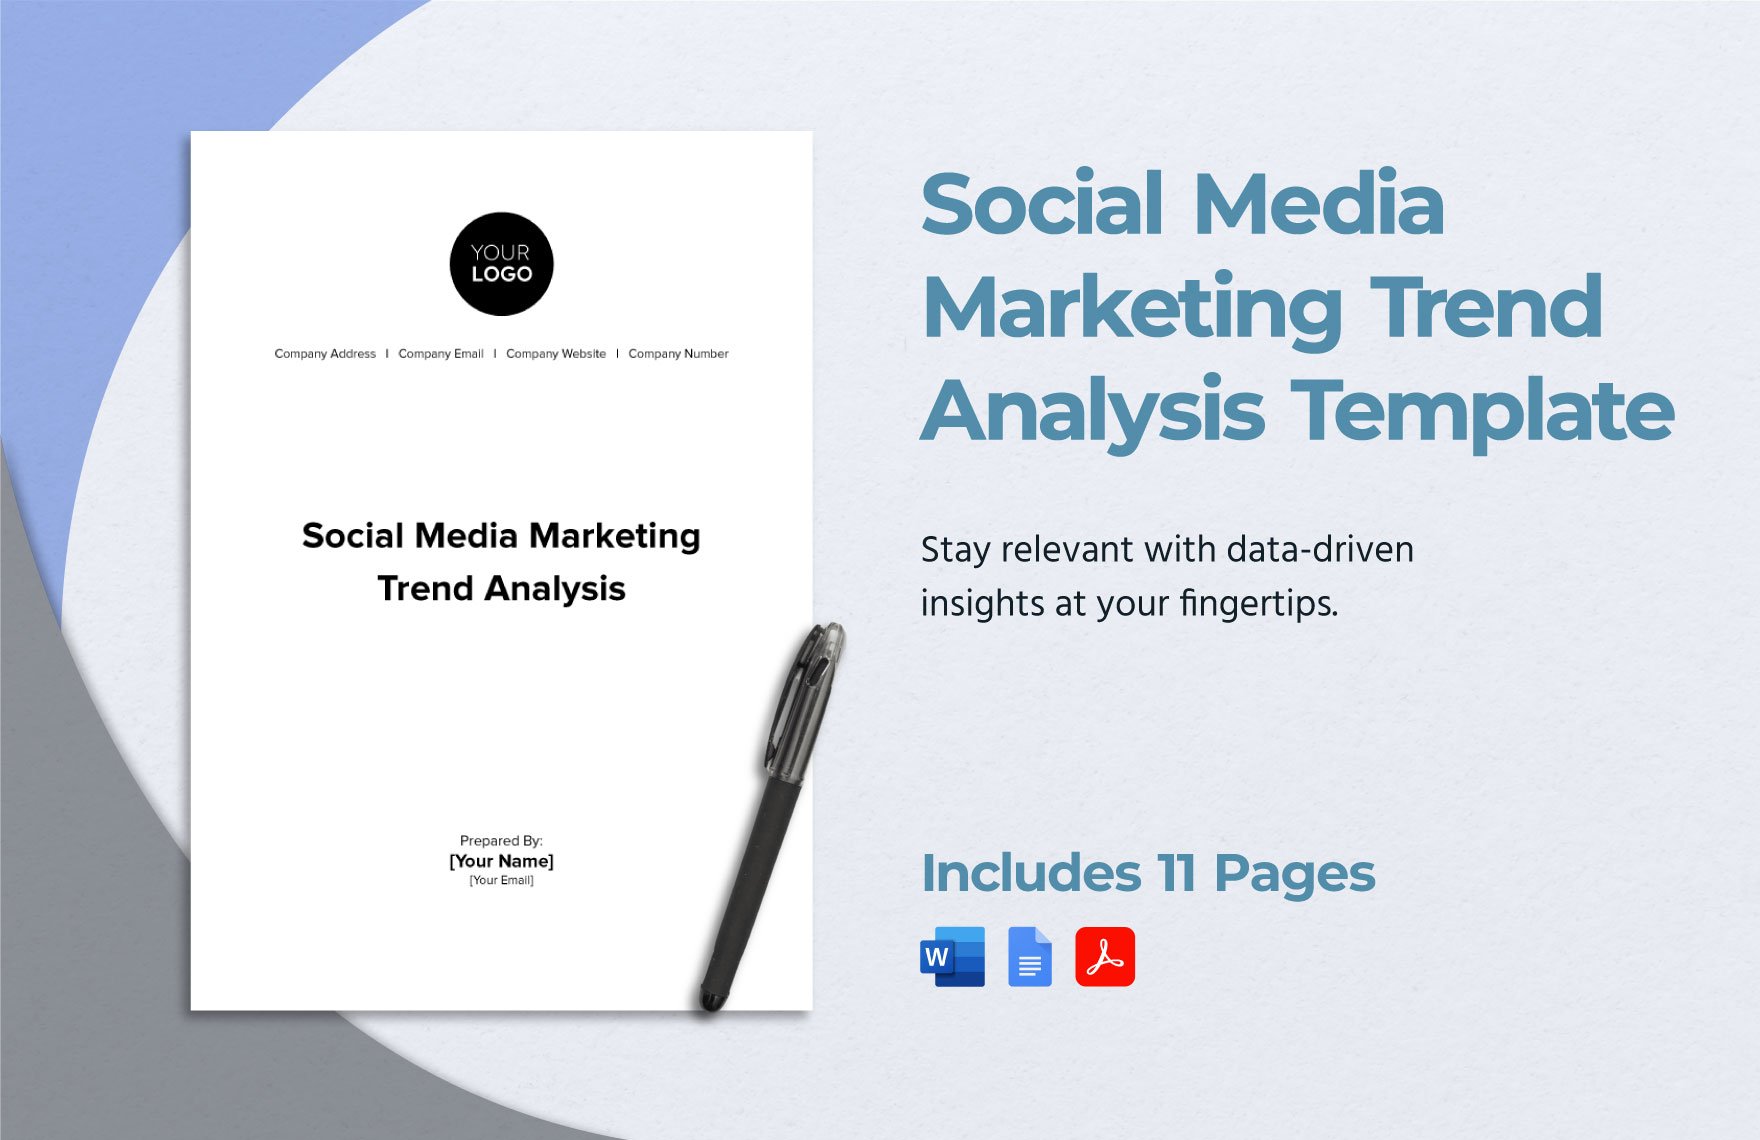 Social Media Marketing Trend Analysis Template